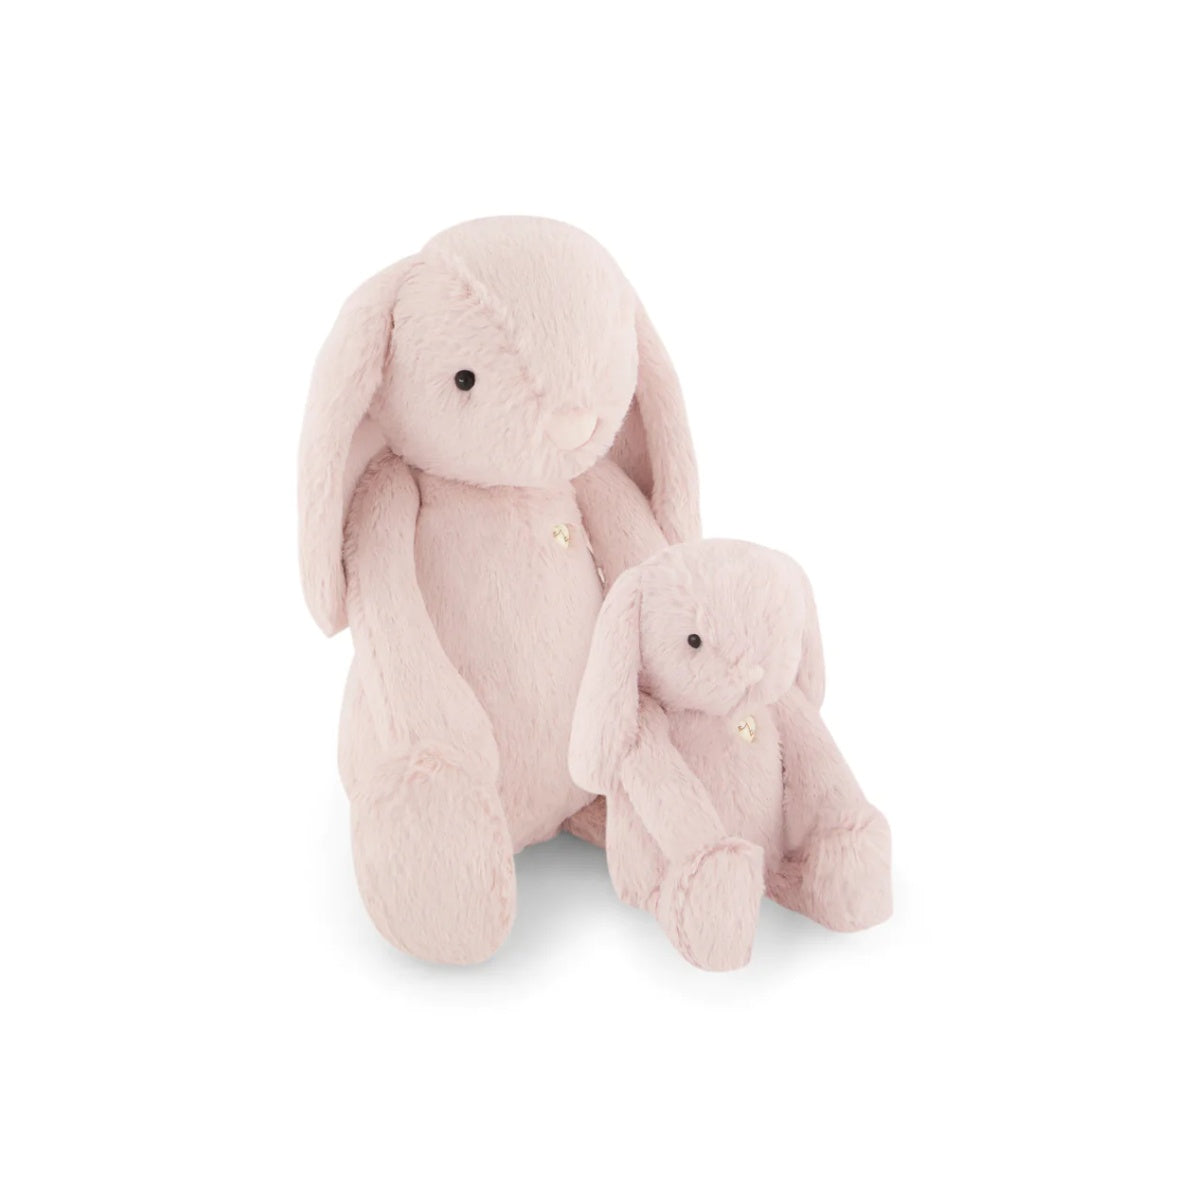 Snuggle Bunnies - Penelope the Bunny - Blush